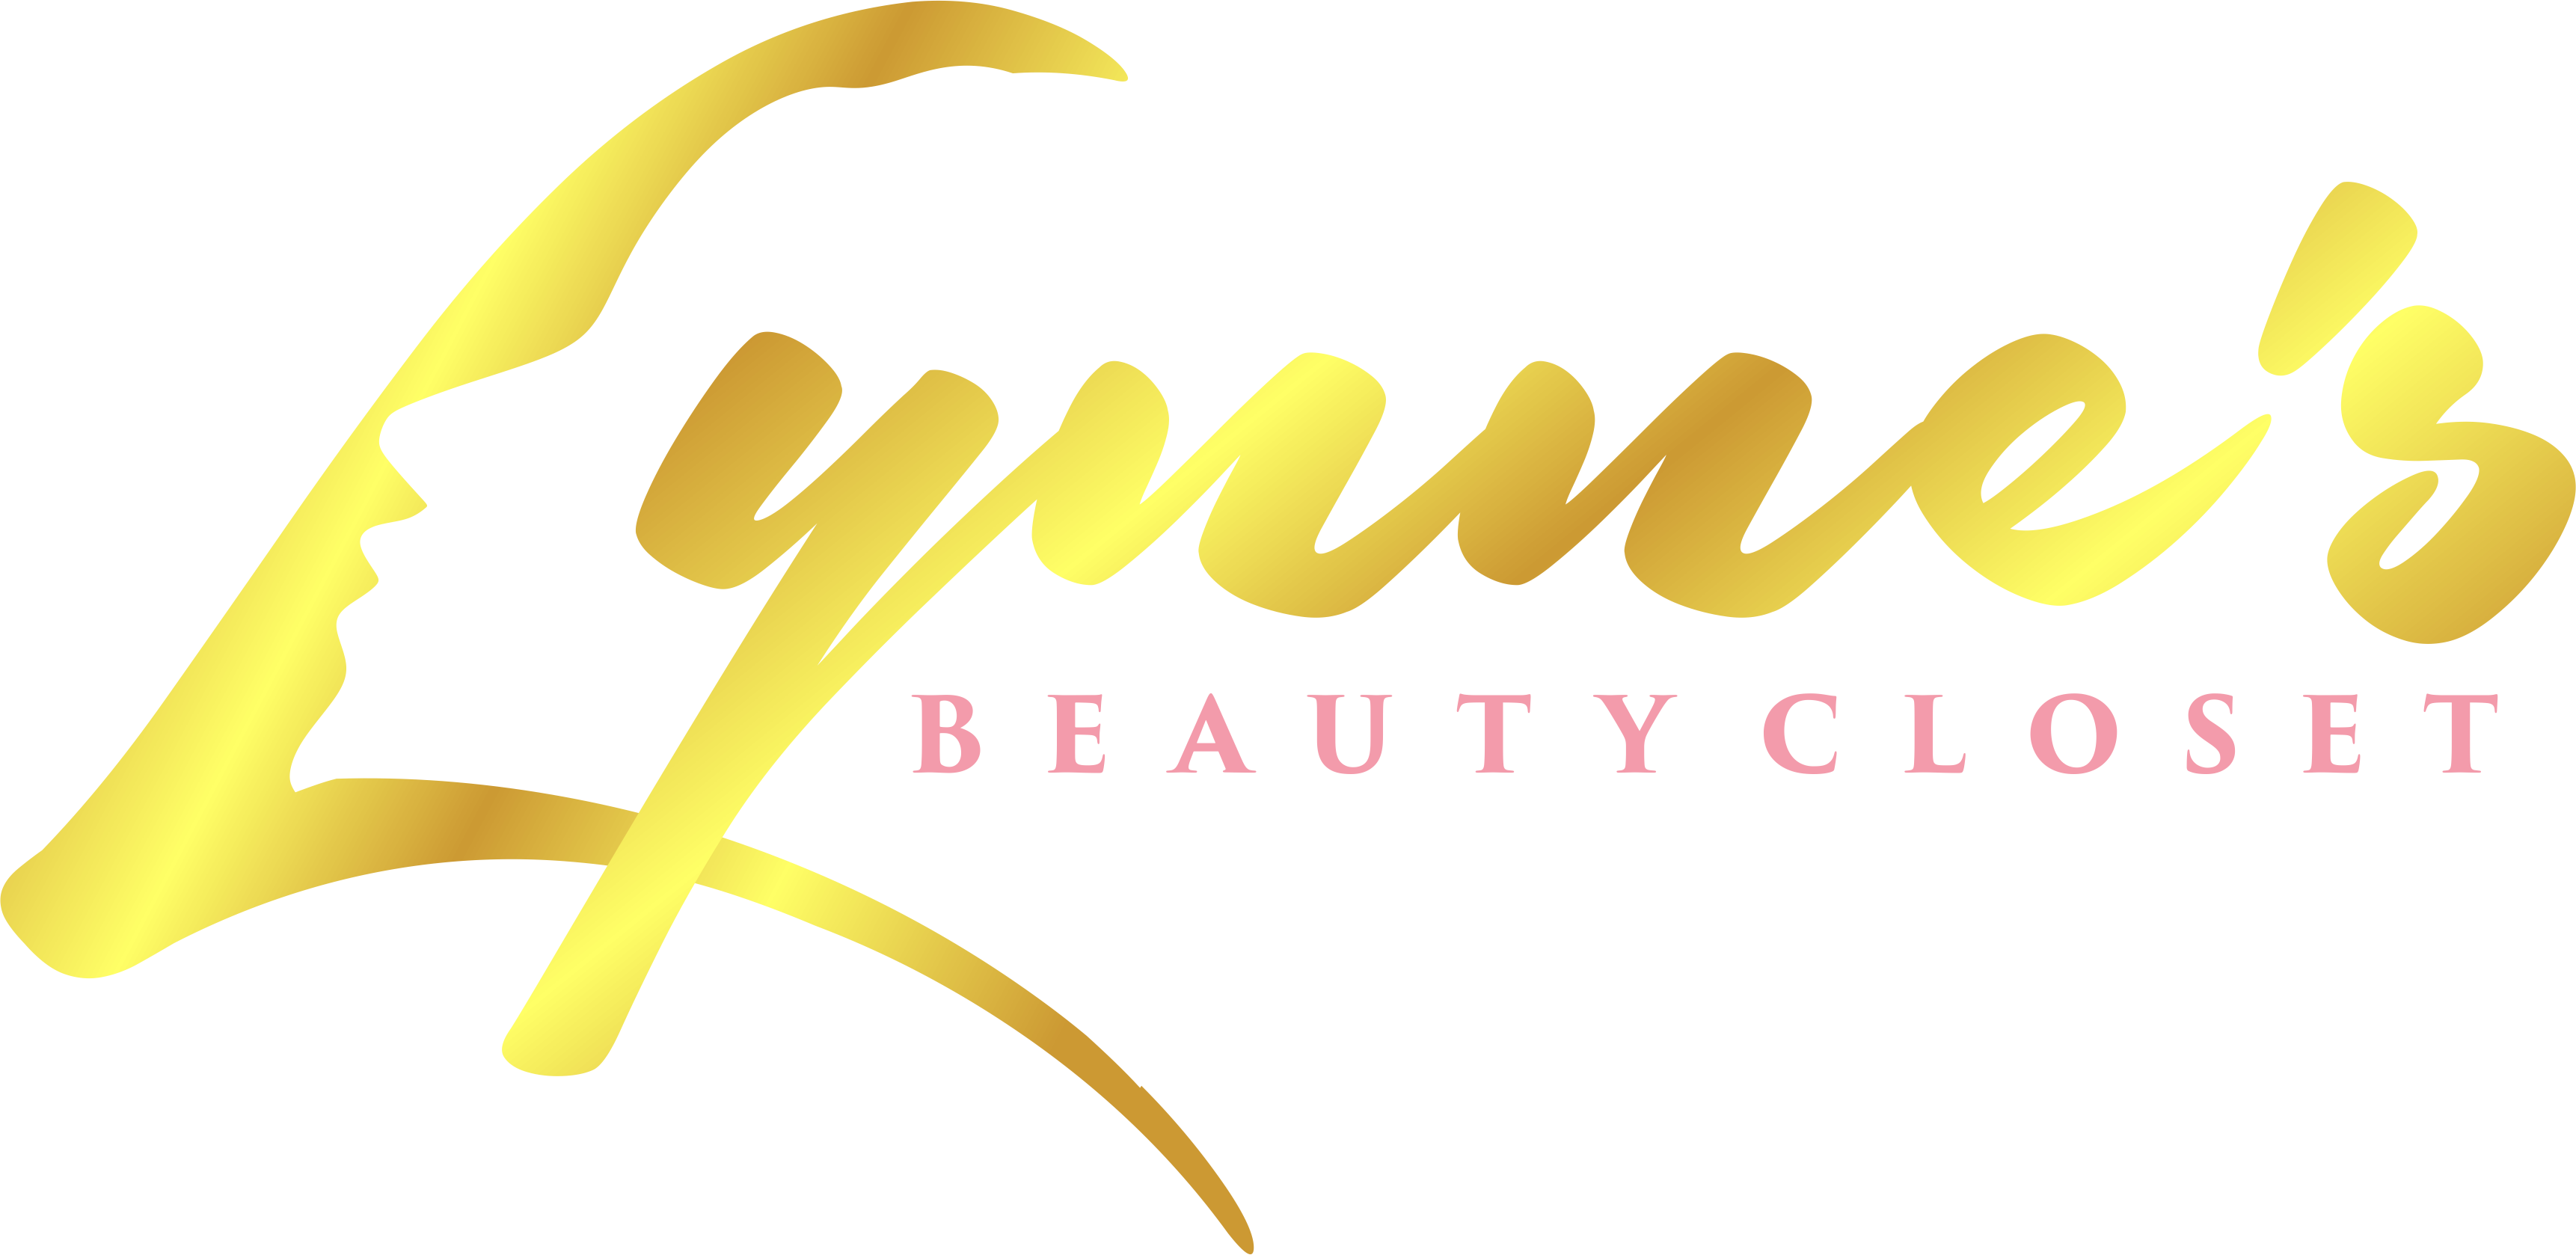 Lynnes Beauty Closet